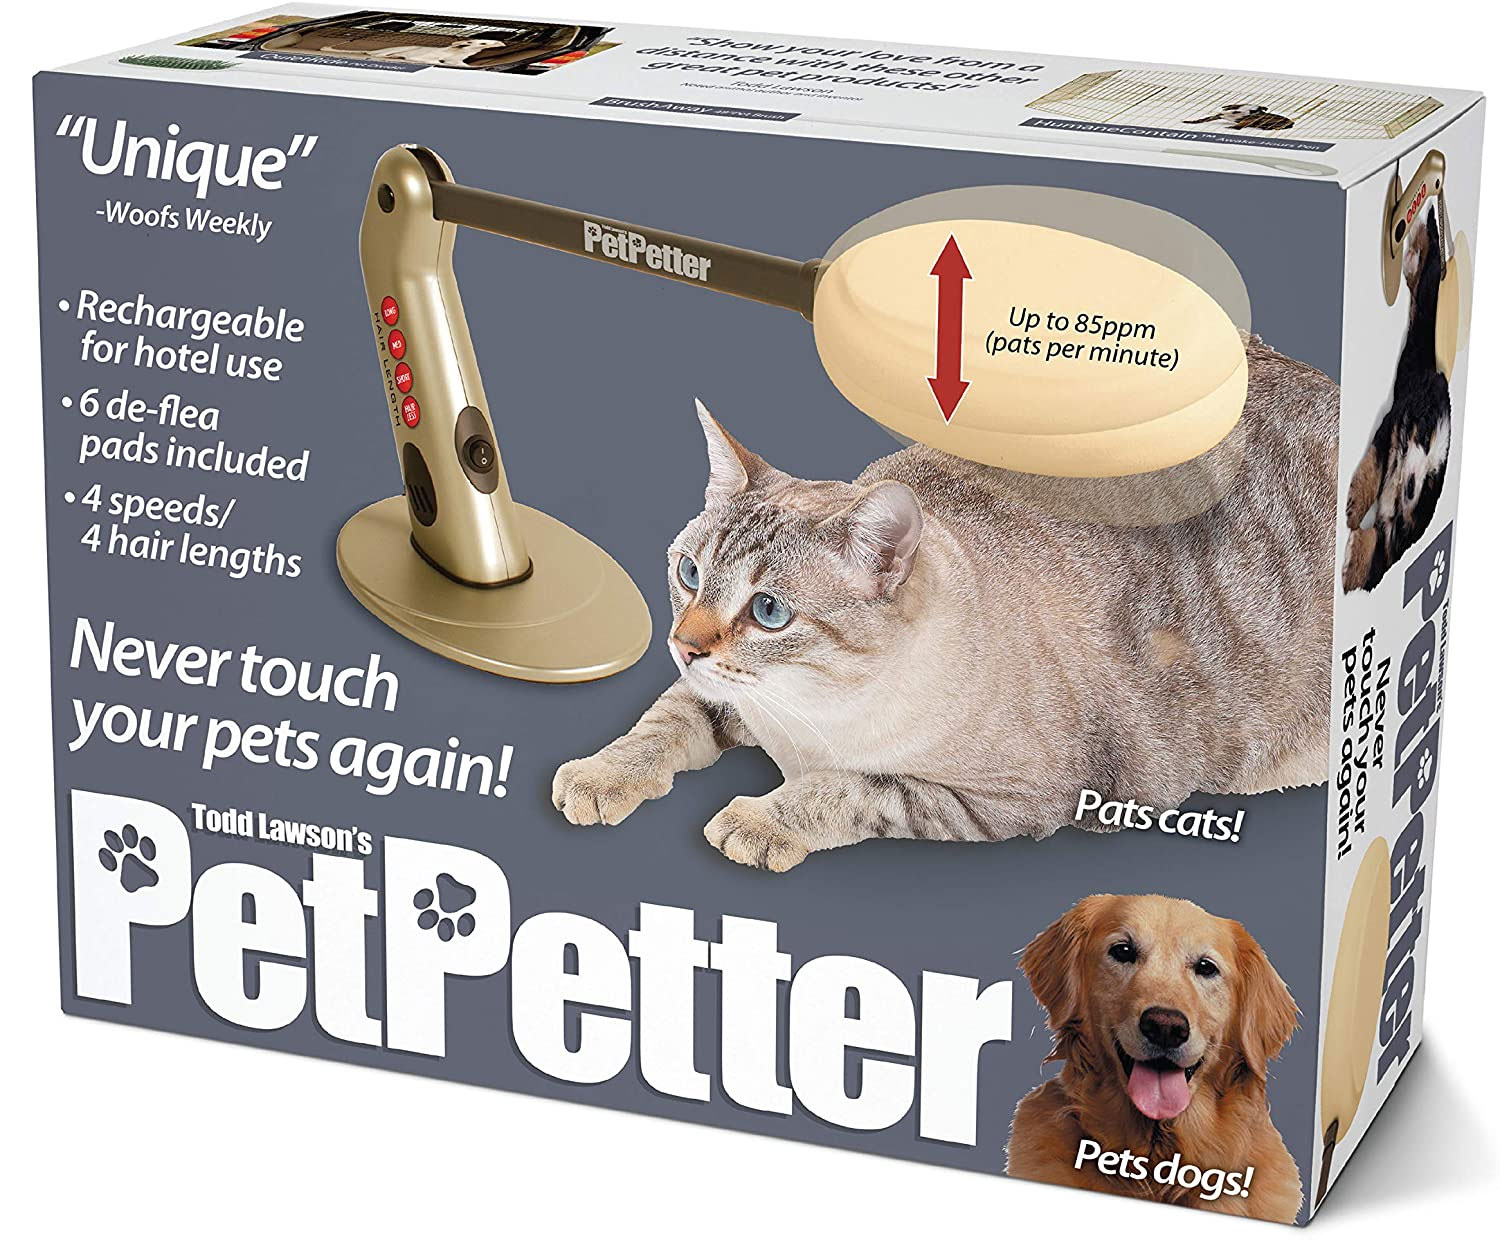 The Pet Petter